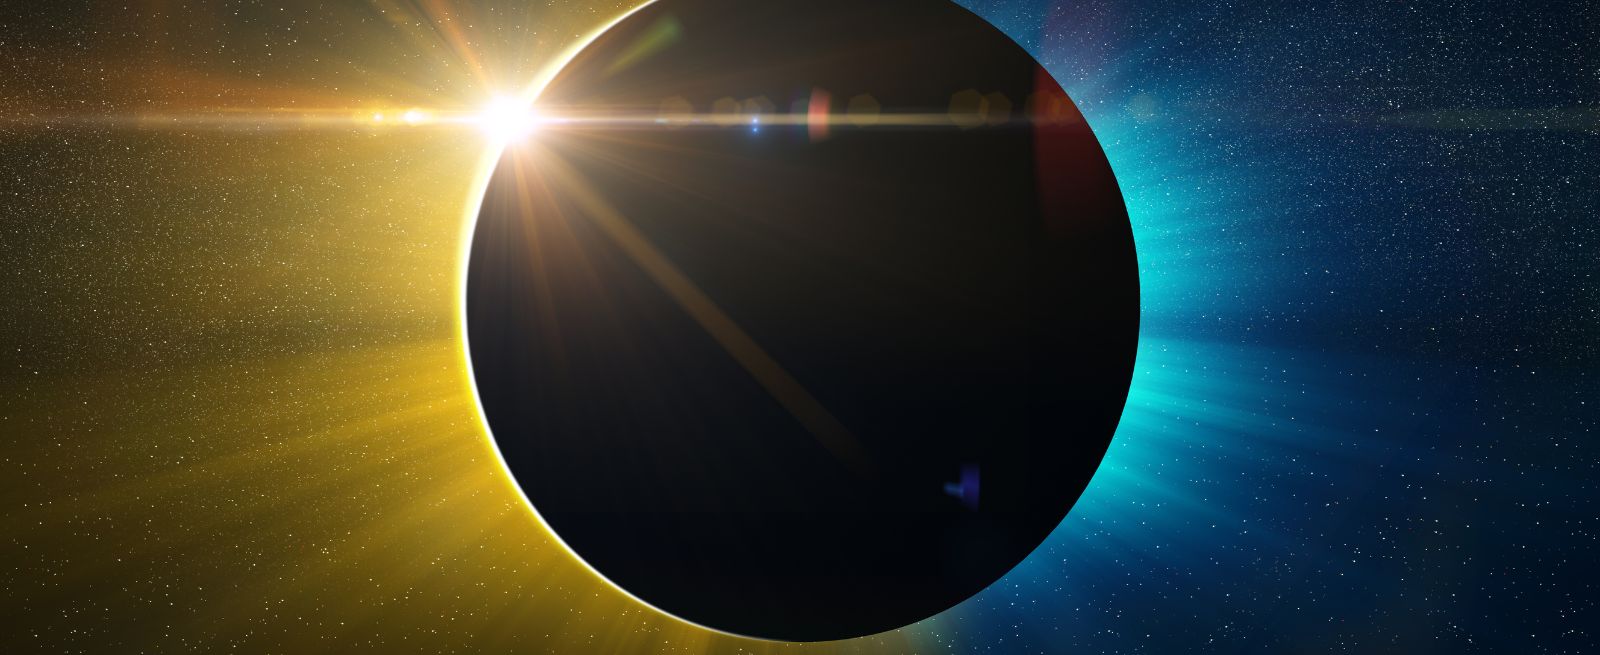 Solar Eclipse Image